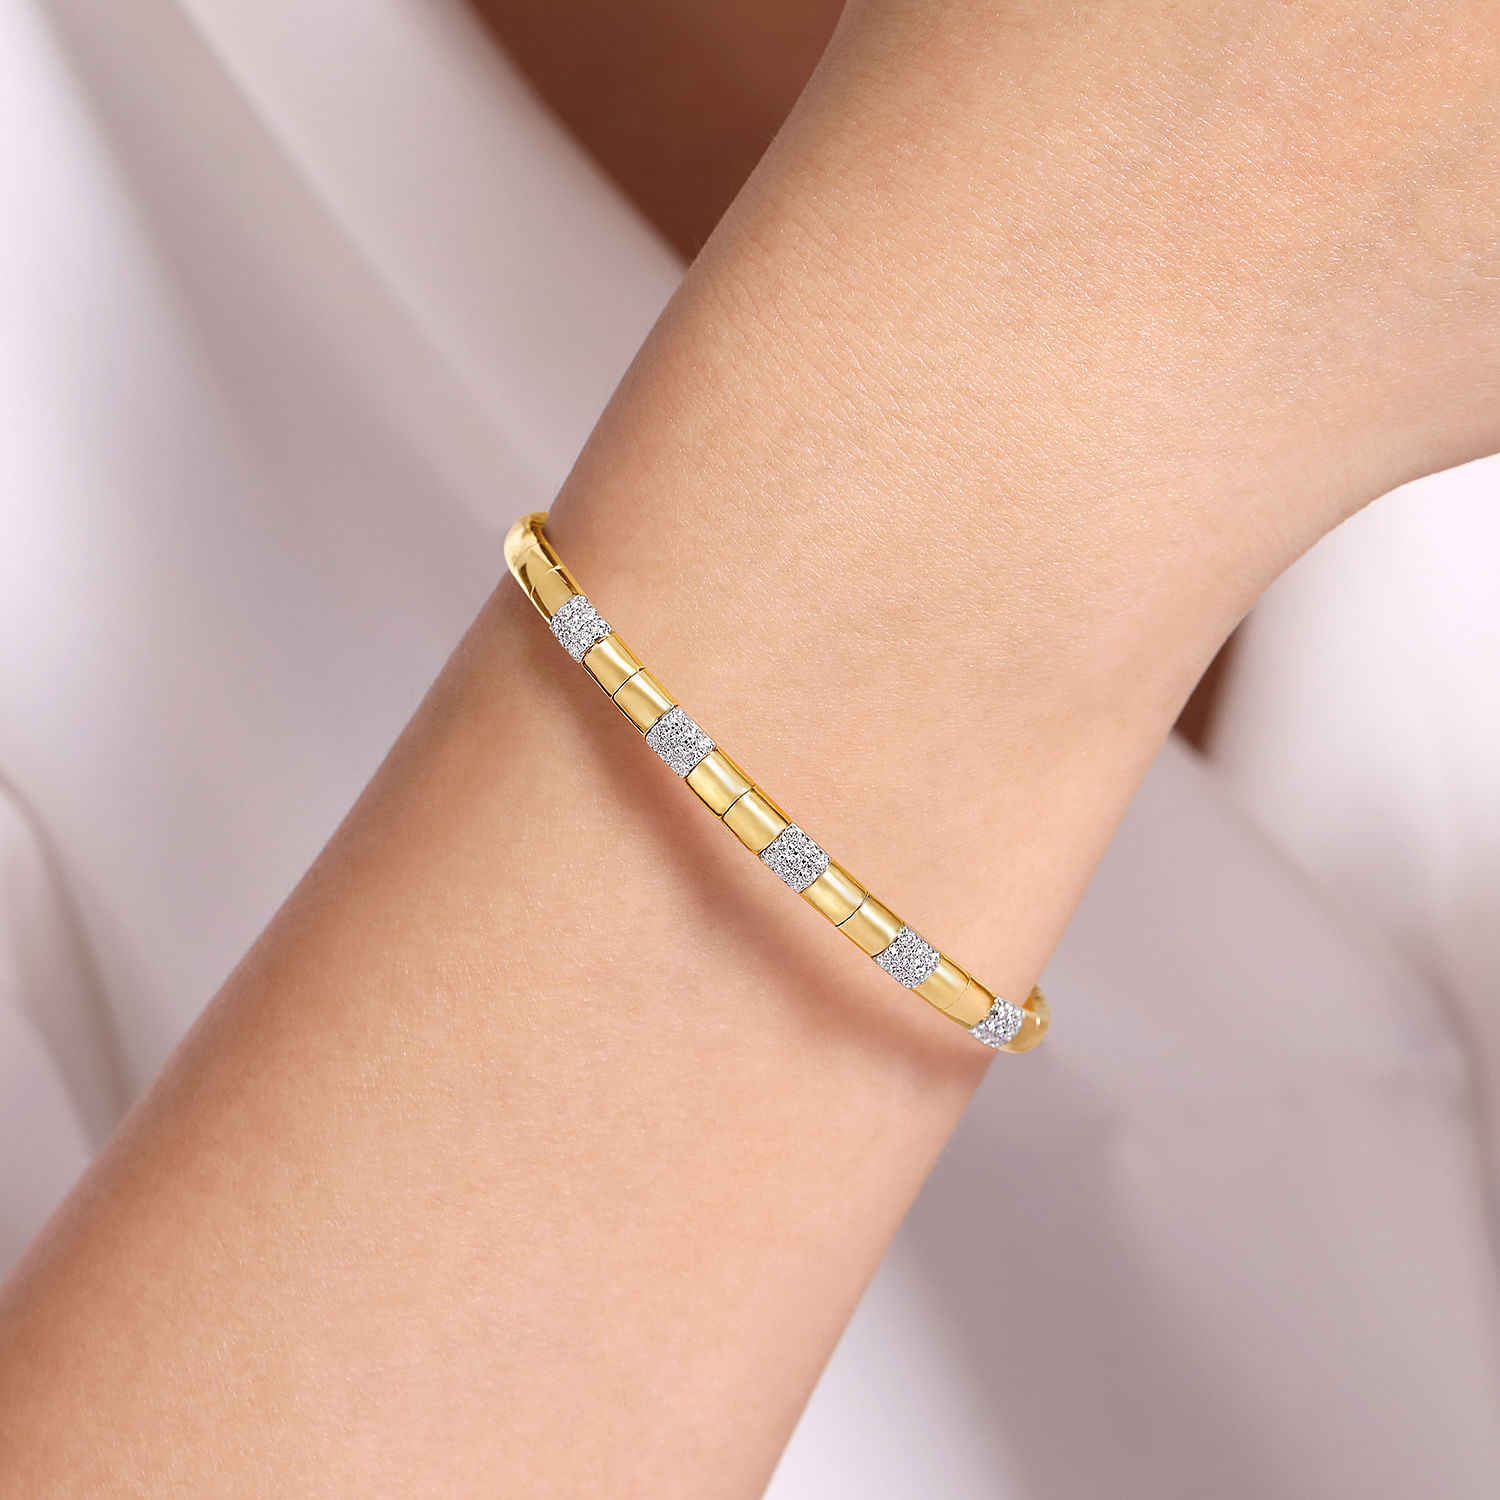 14K Yellow Gold Cuff Bracelet with Pavé Diamond Stations